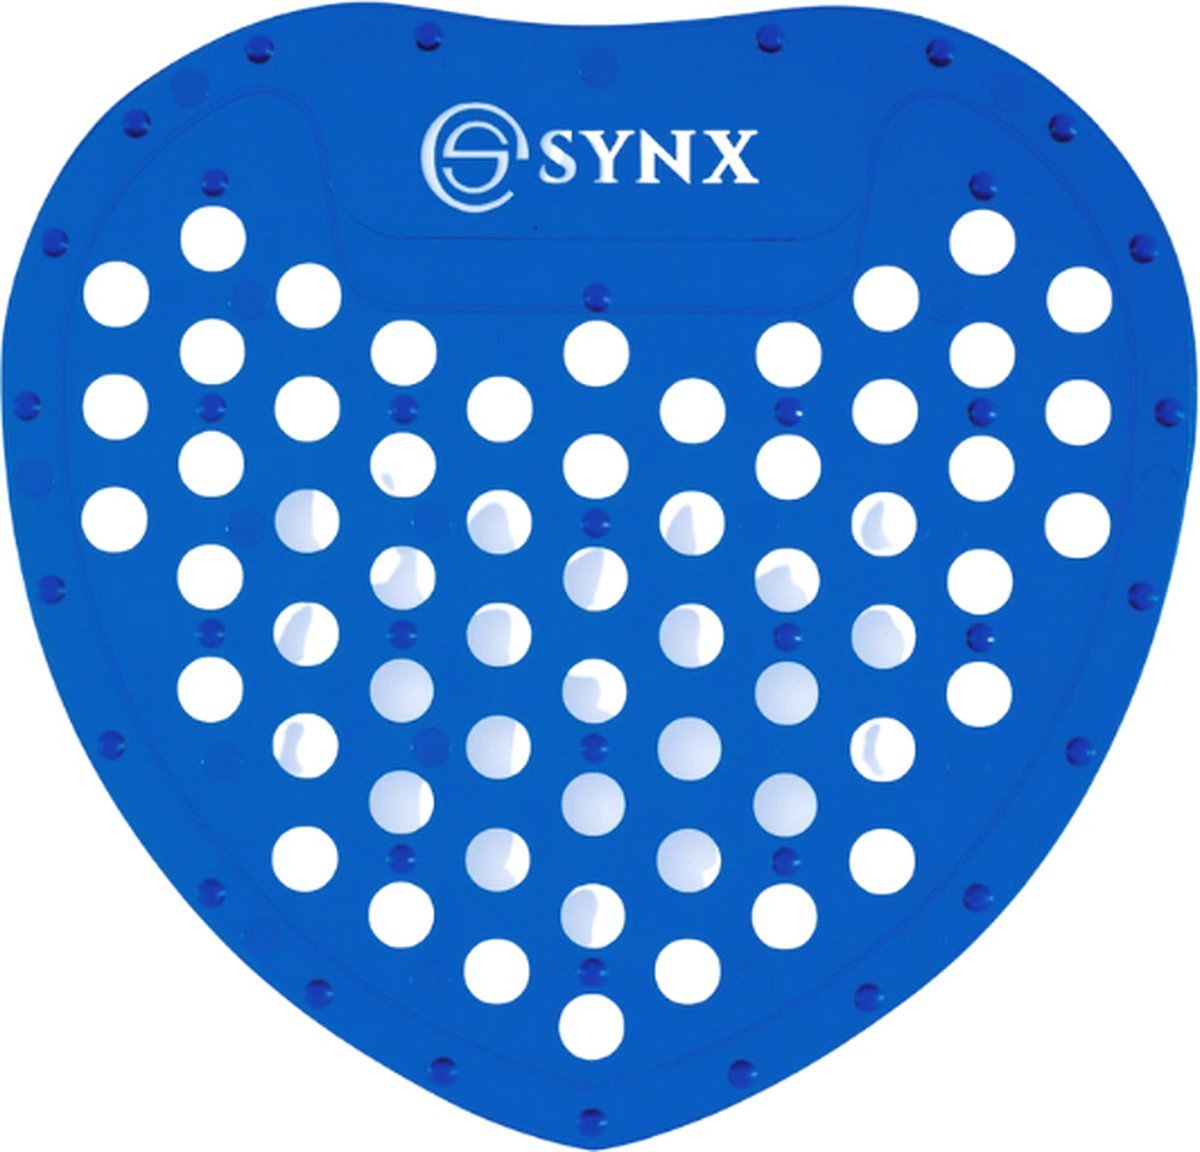 Synx Tools Urinoirmatje met frisse Geur - Urinoirmatten - 10 stuks voordeelverpakking - Anti spat ma